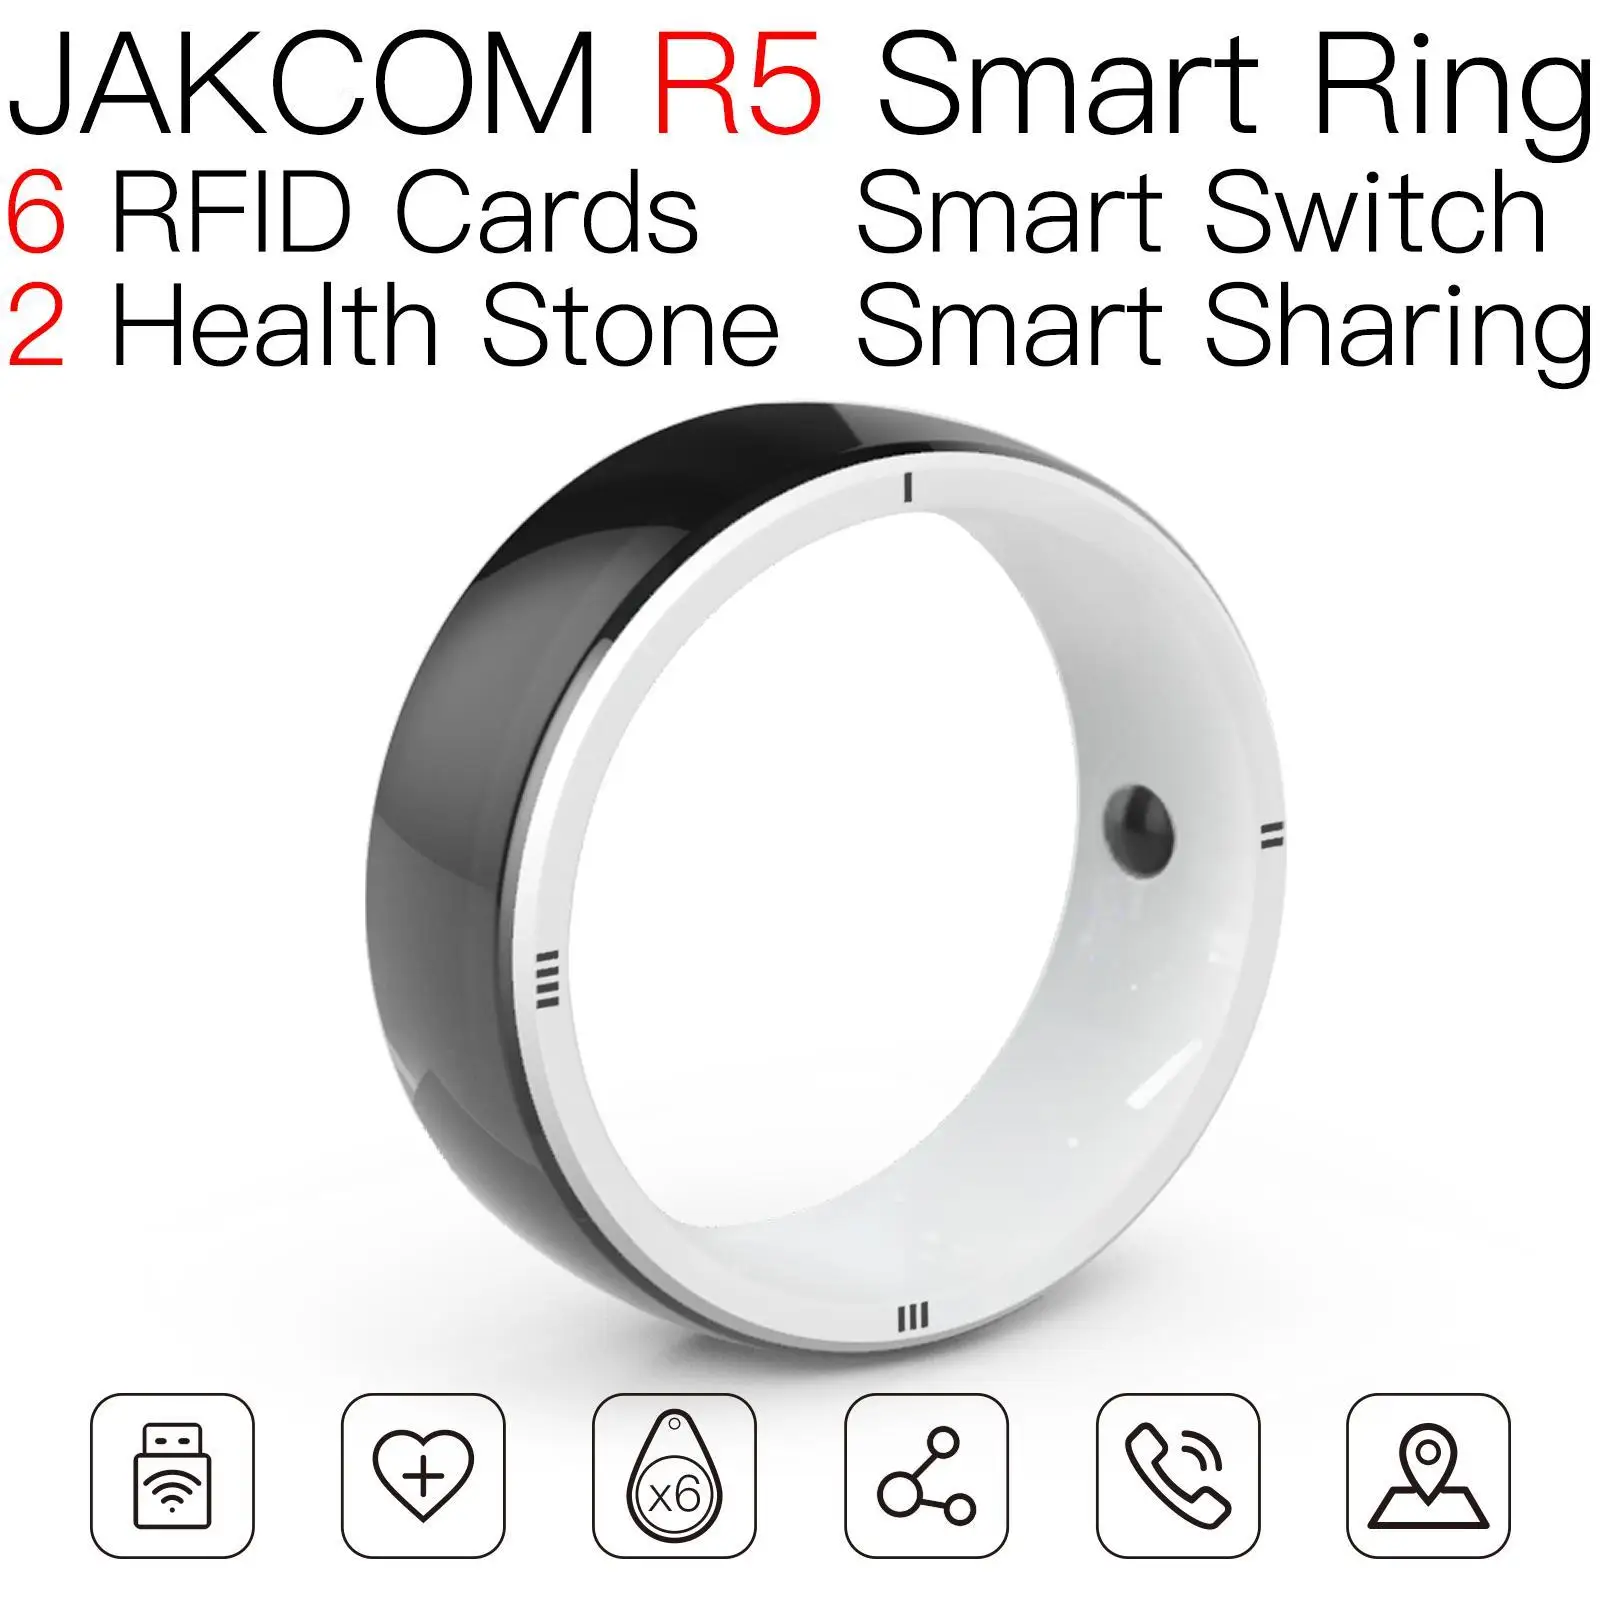 

JAKCOM R5 Smart Ring Super value as rfid protection em 4100 cat id card nfc tag flexible antenna hf ham radio seguro carte